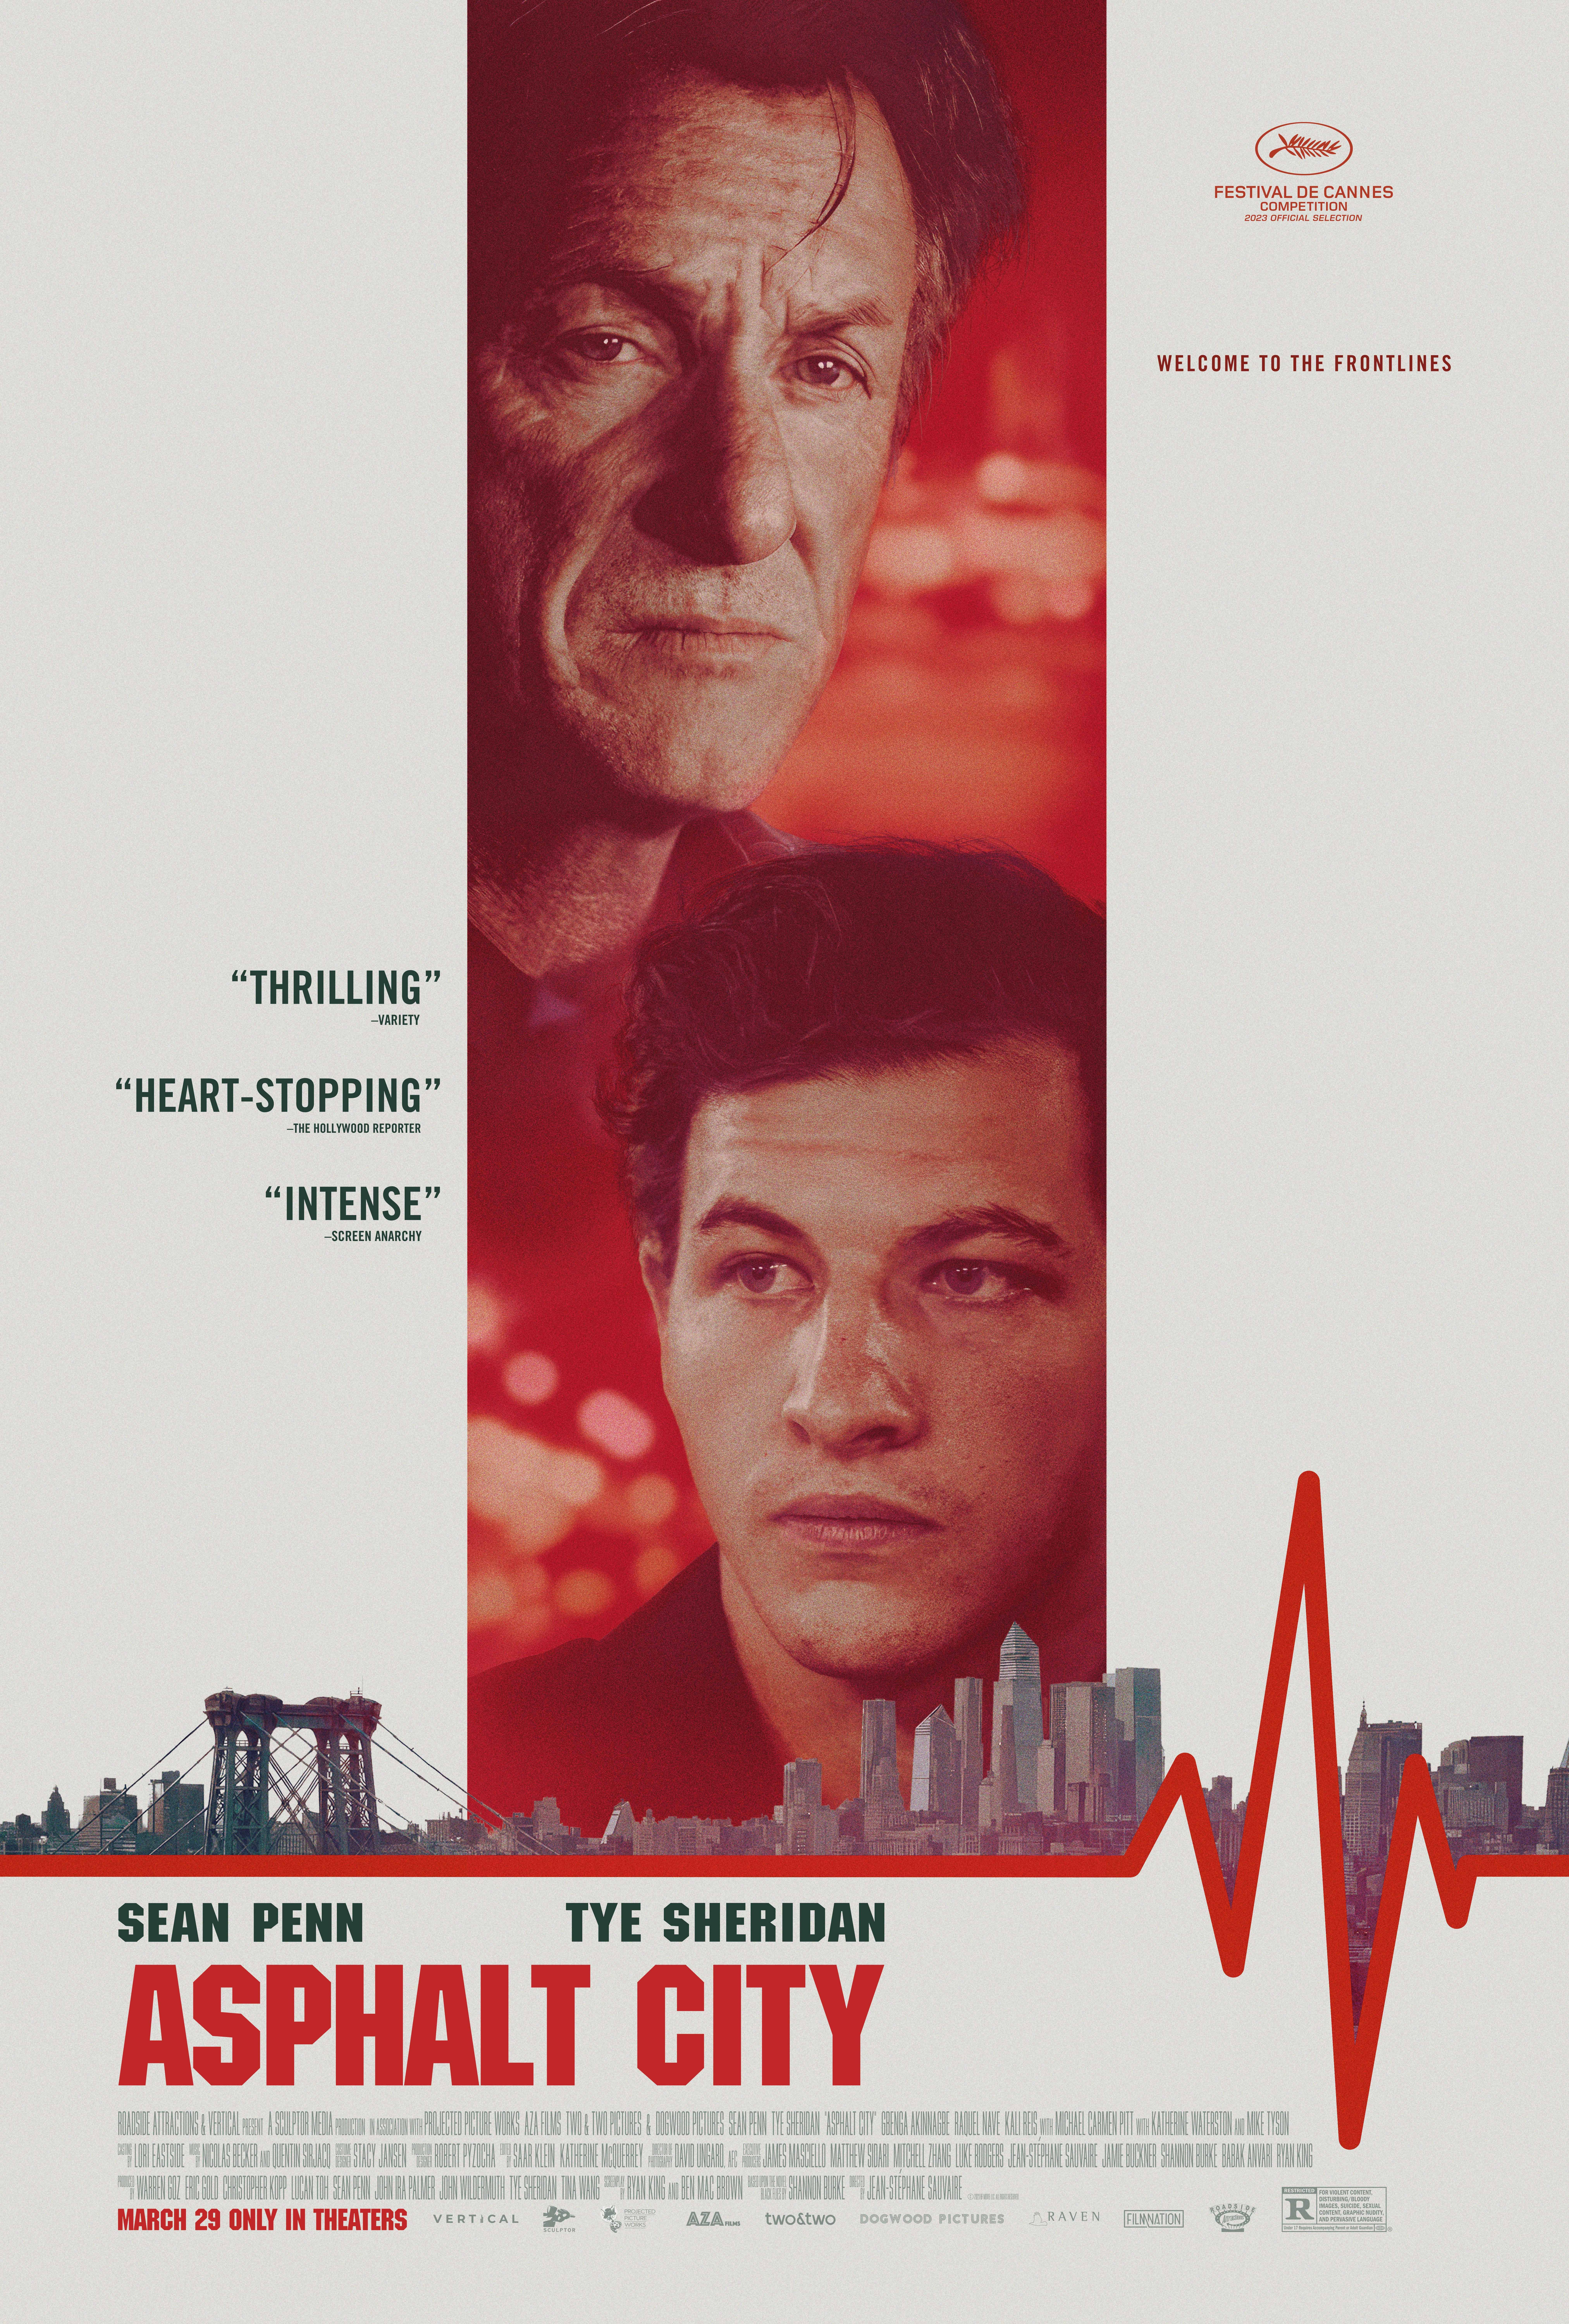 “Heart-Stopping” Paramedic Film Asphalt City Poster Showcases Sean Penn & Tye Sheridan